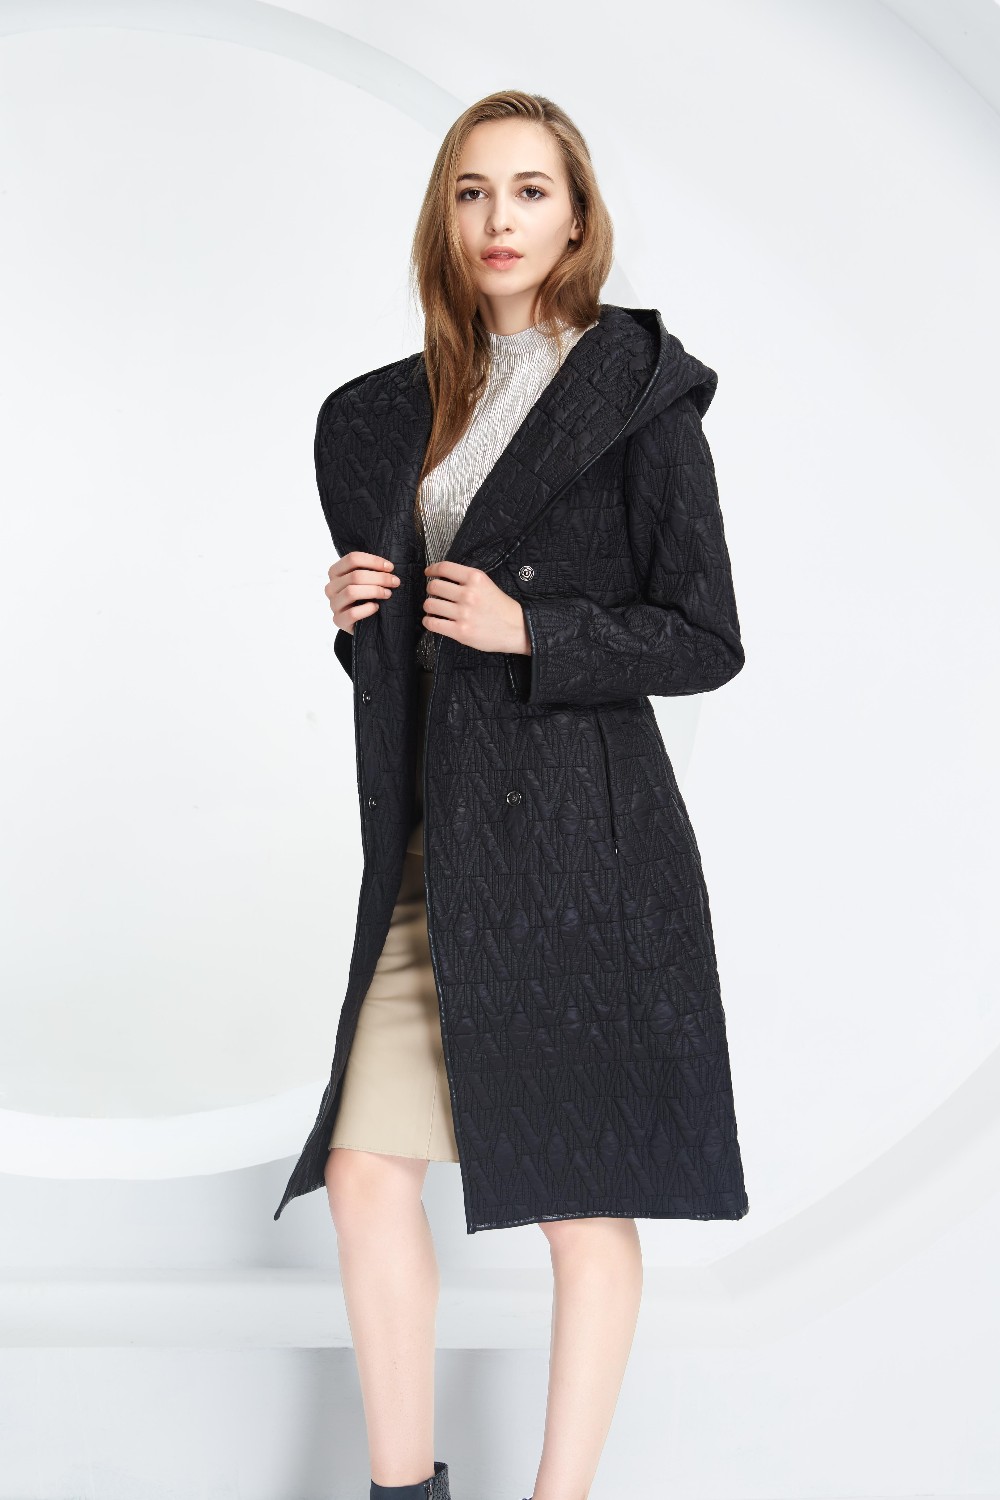 BASIC-EDITIONS-Spring-Autumn-Women-Long-Jacket-Thin-Cotton-Coat-Ladies-Slim-Long-Hooded-Collar-Adjus-32564453120